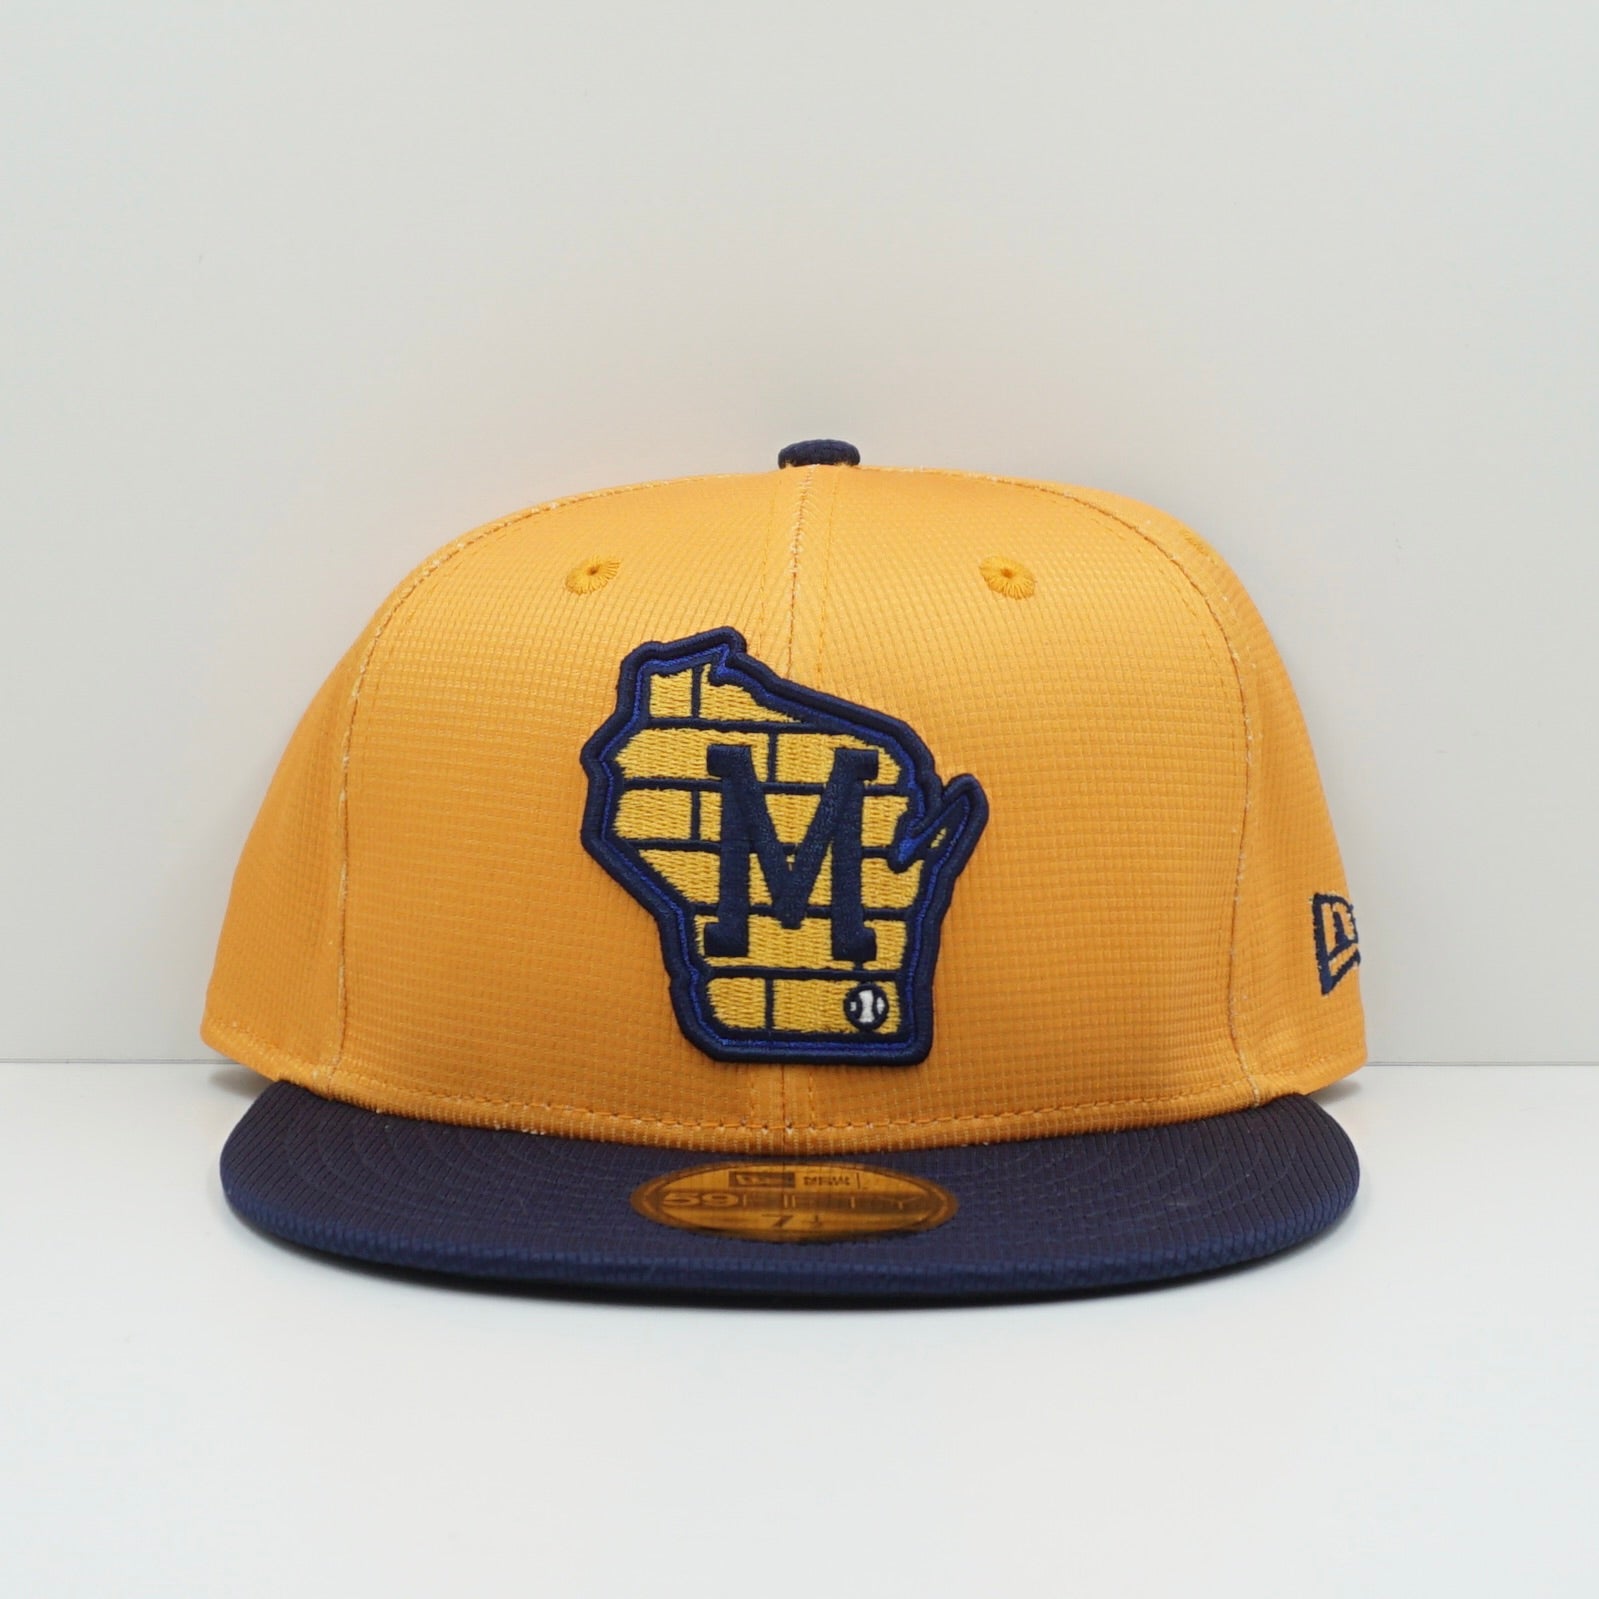 New Era Milwaukee Brewers Yellow Navy Fitted Cap